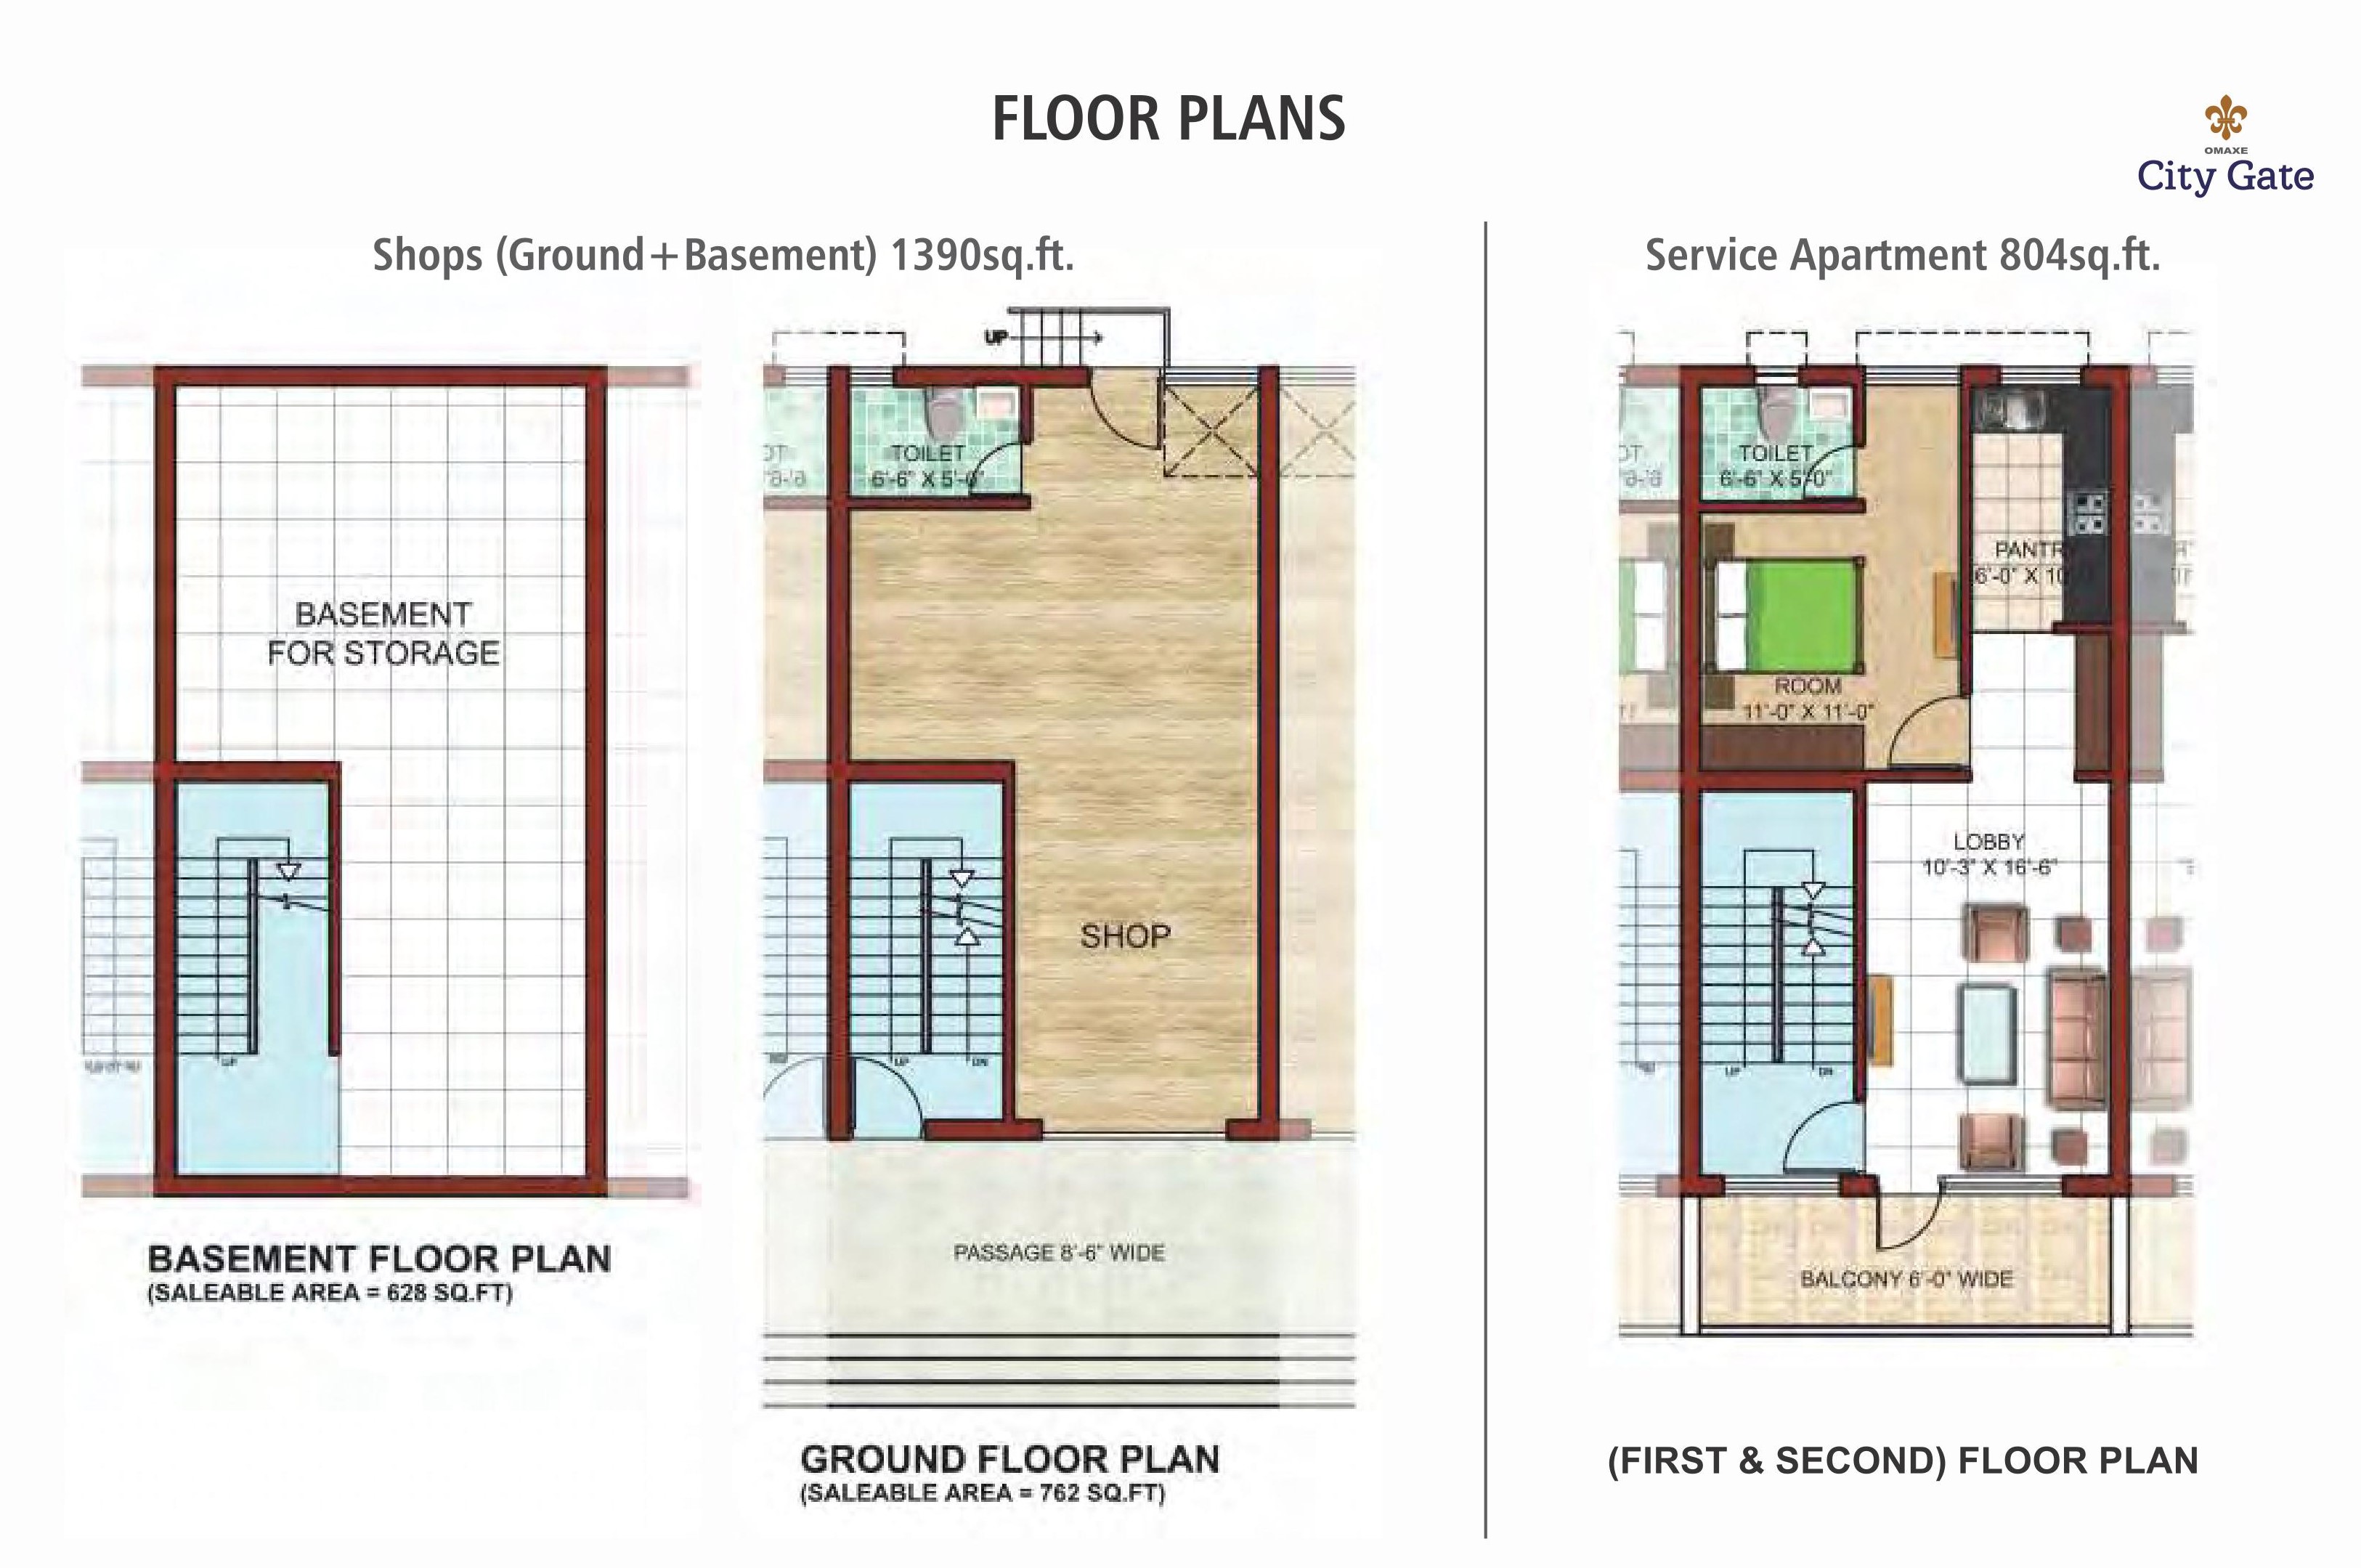 Ground Floor Plan - Typical